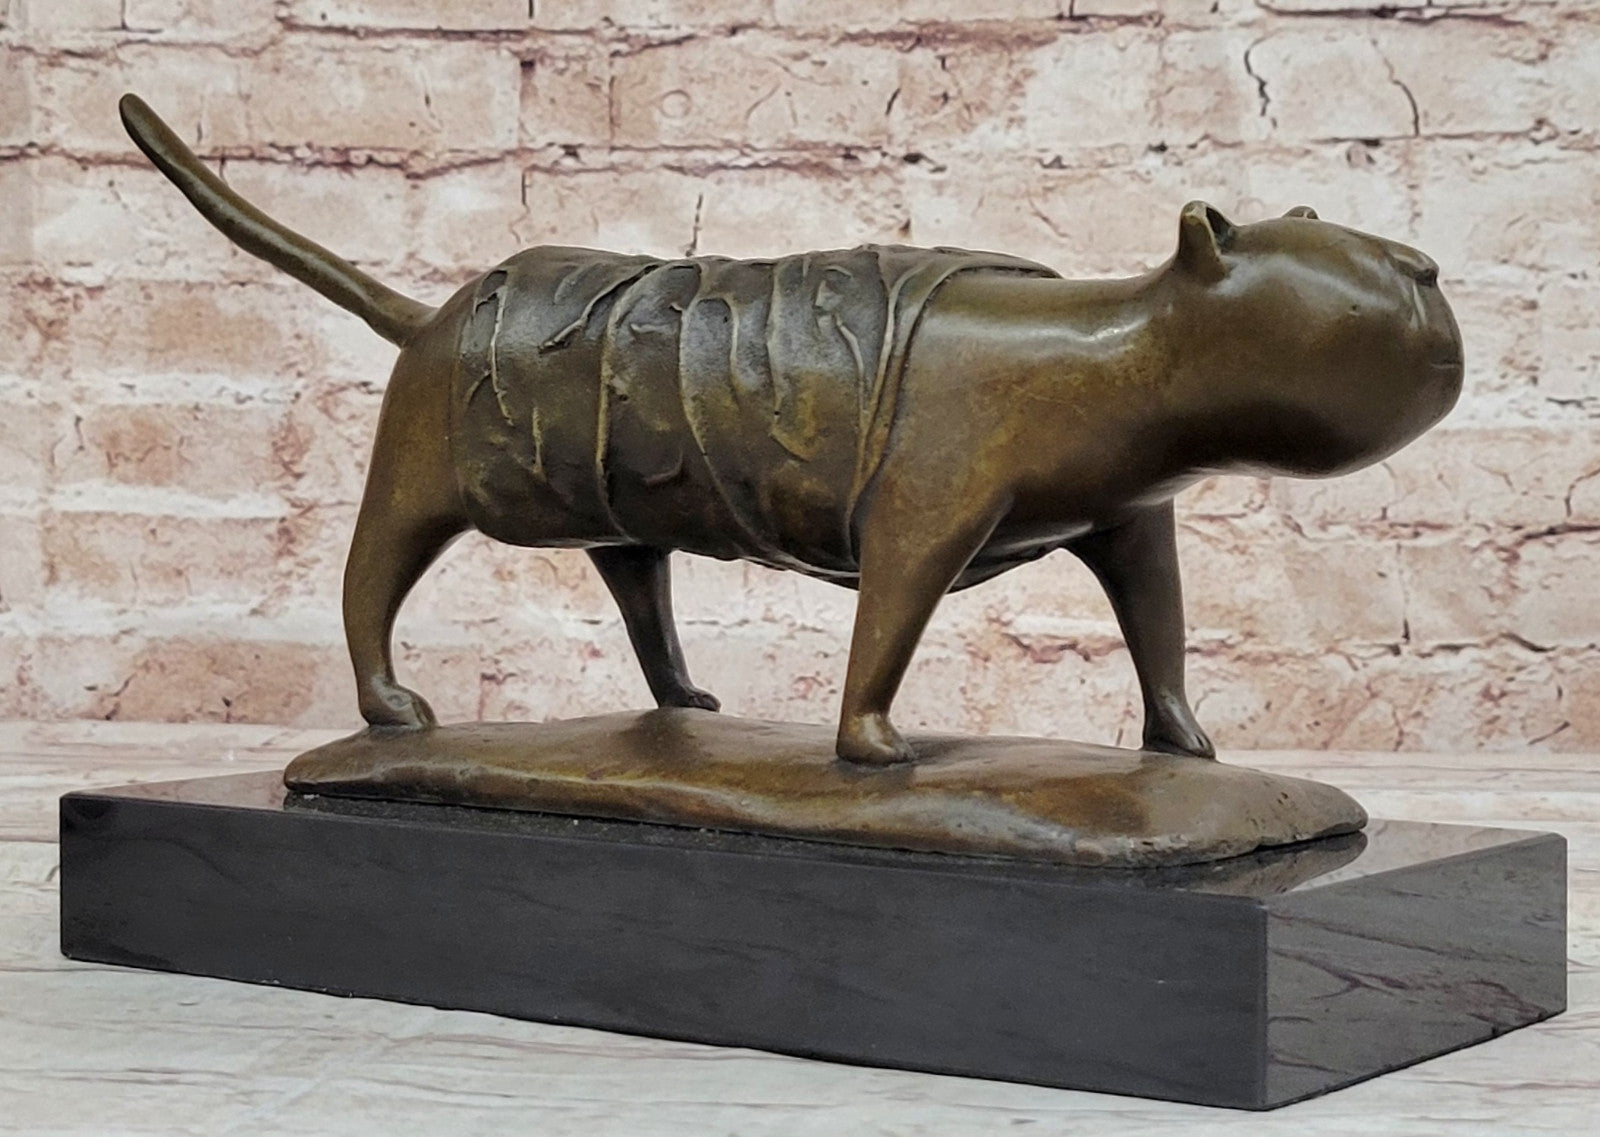 Botero Cat Bronze Statue Hot Cast Collectible Artwork Hand Made Artwork